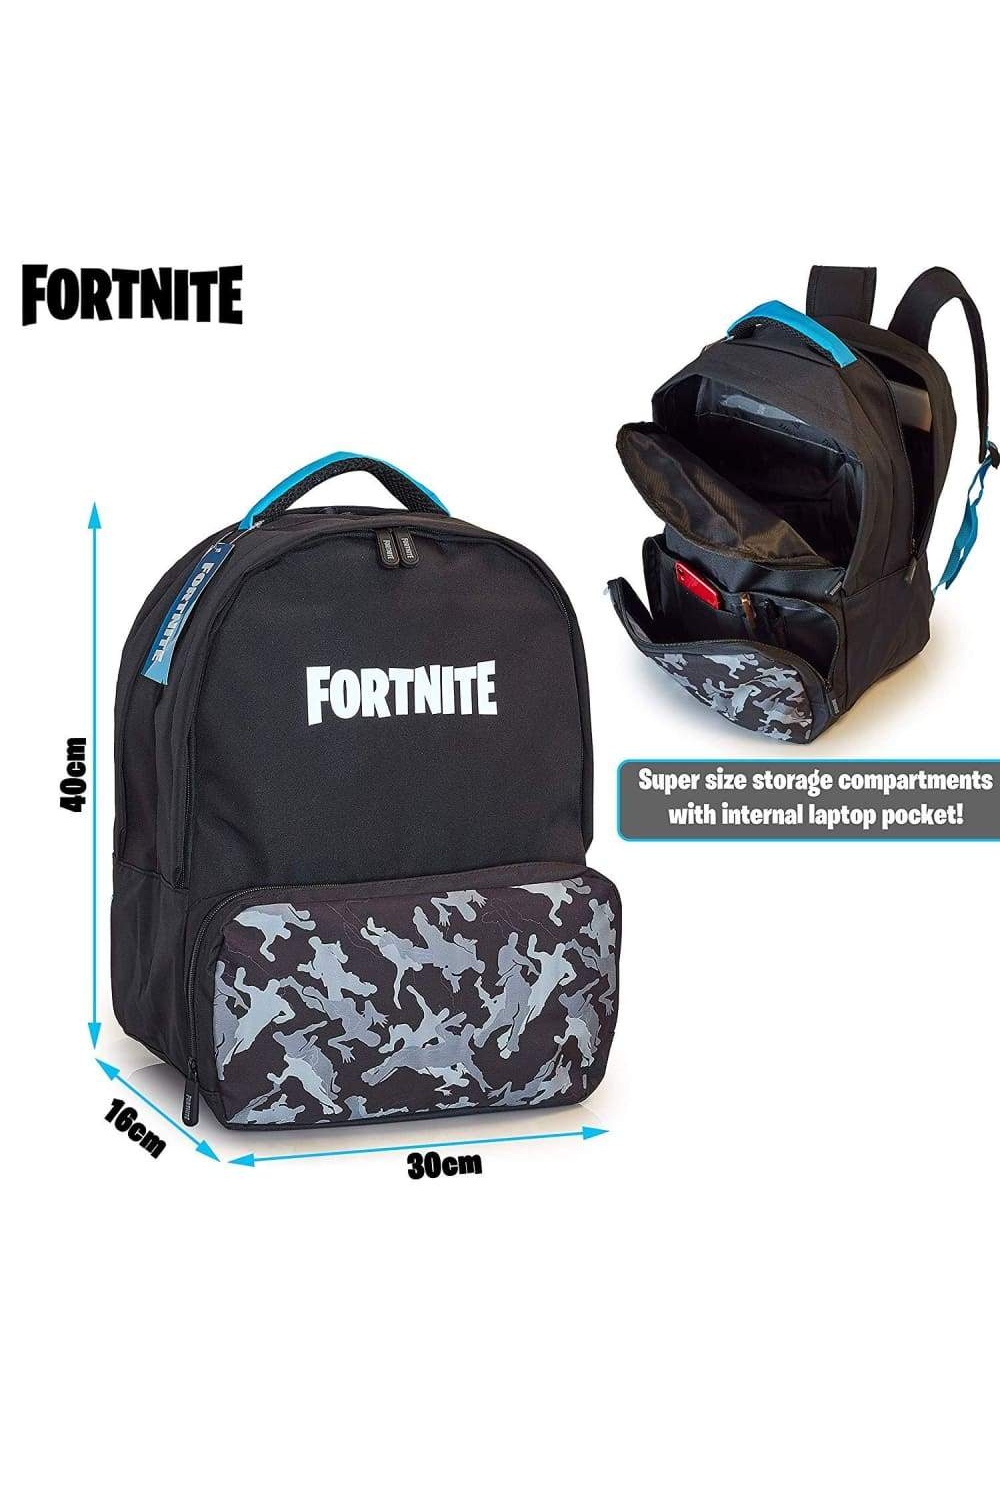 Fortnite Backpack, School Bag, Large Rucksack for Kids, Fortnite Gifts for  Boys